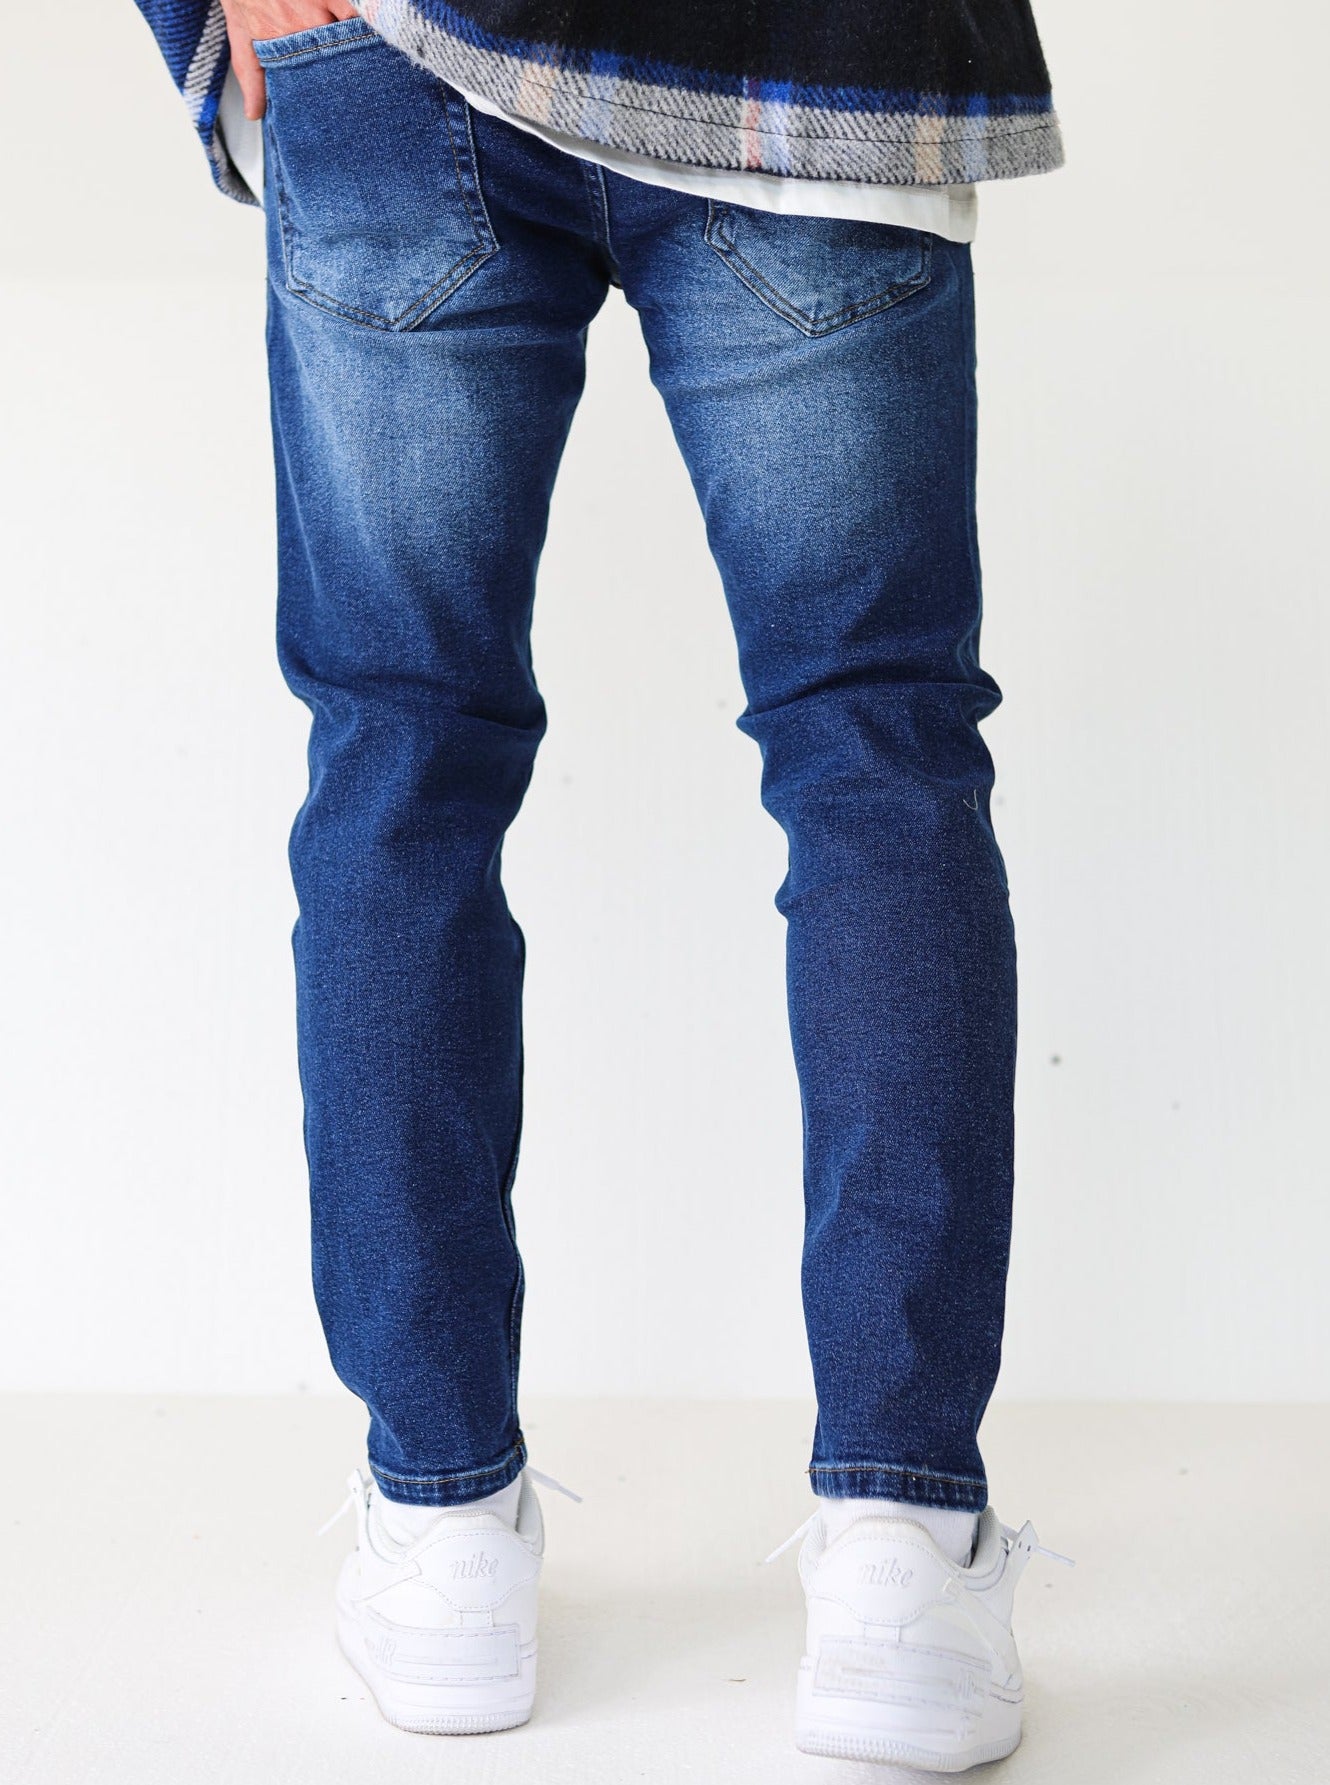 Premium Slightly Ripped Blue Jeans